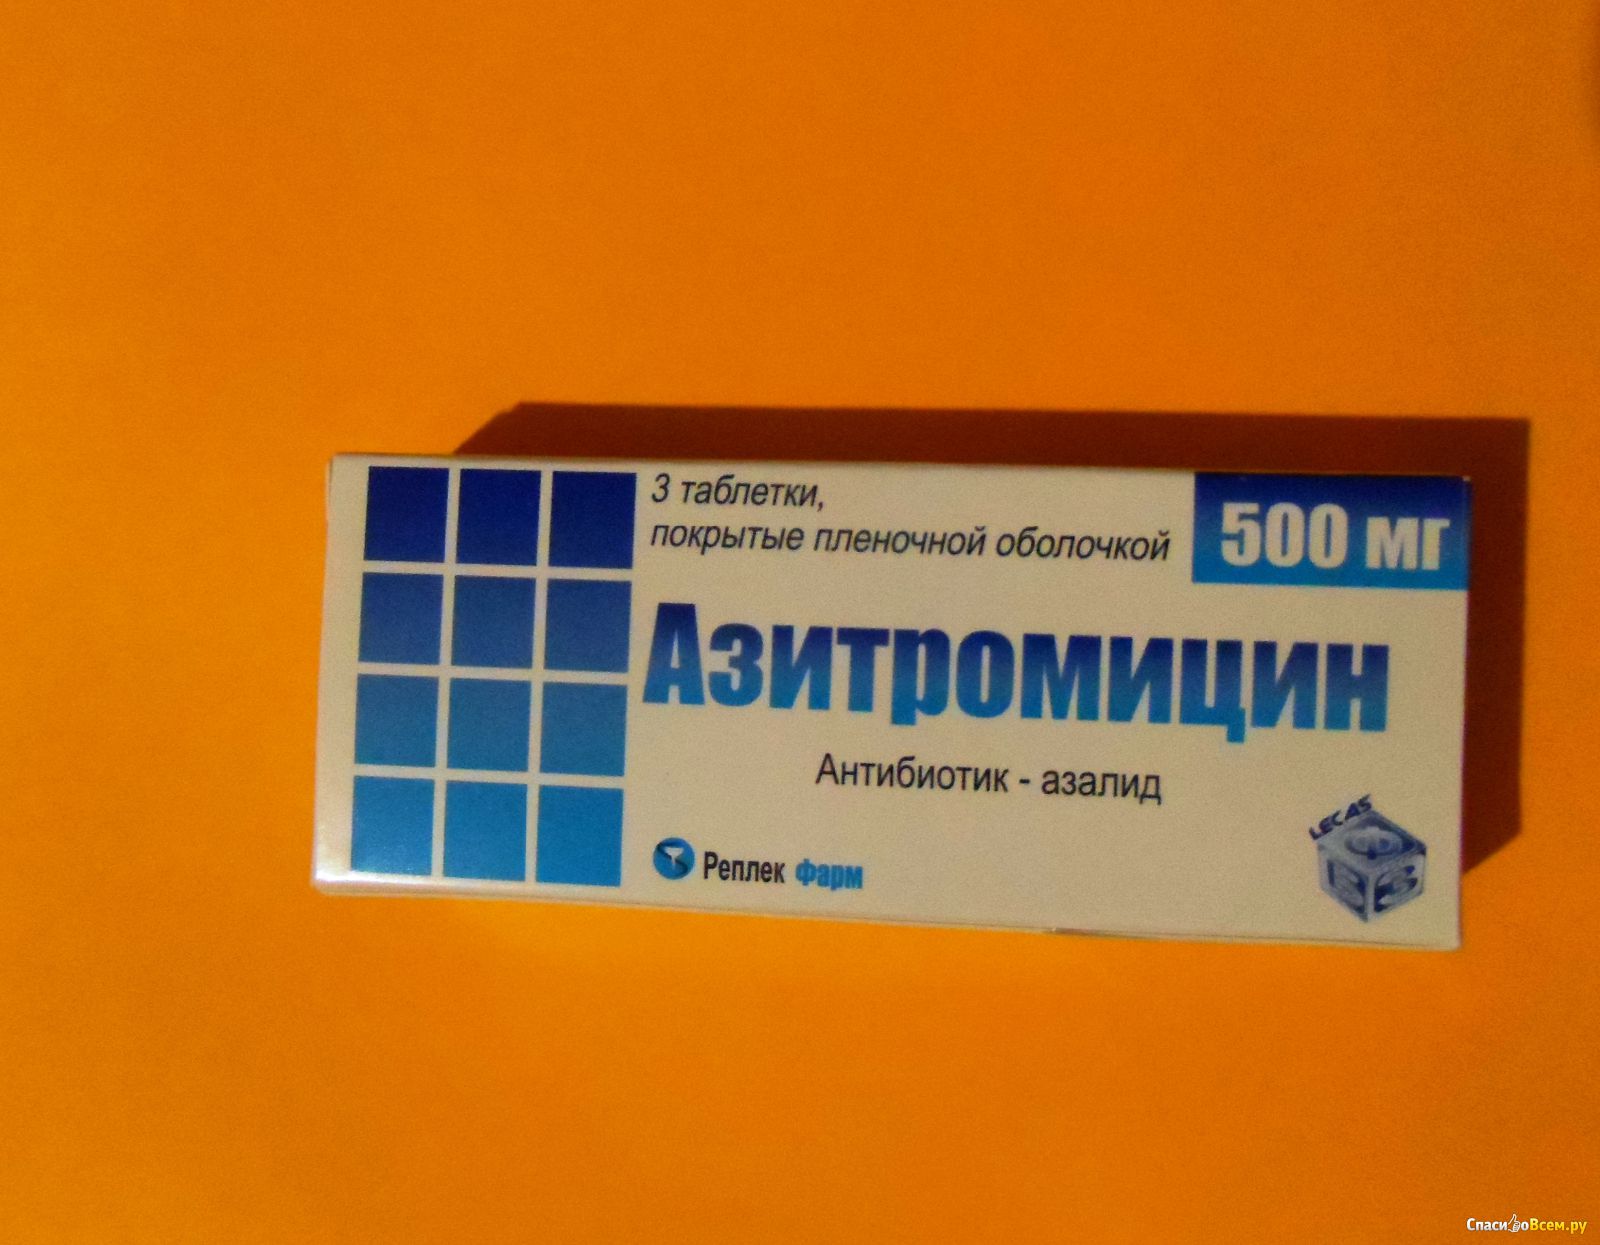 Антибиотик который пьют 3. Антибиотик 3 таблетки название при простуде Азитромицин. Антибиотик на 3 дня Азитромицин. Антибиотик который пьется 3 дня. Антибиотики на три дня название.